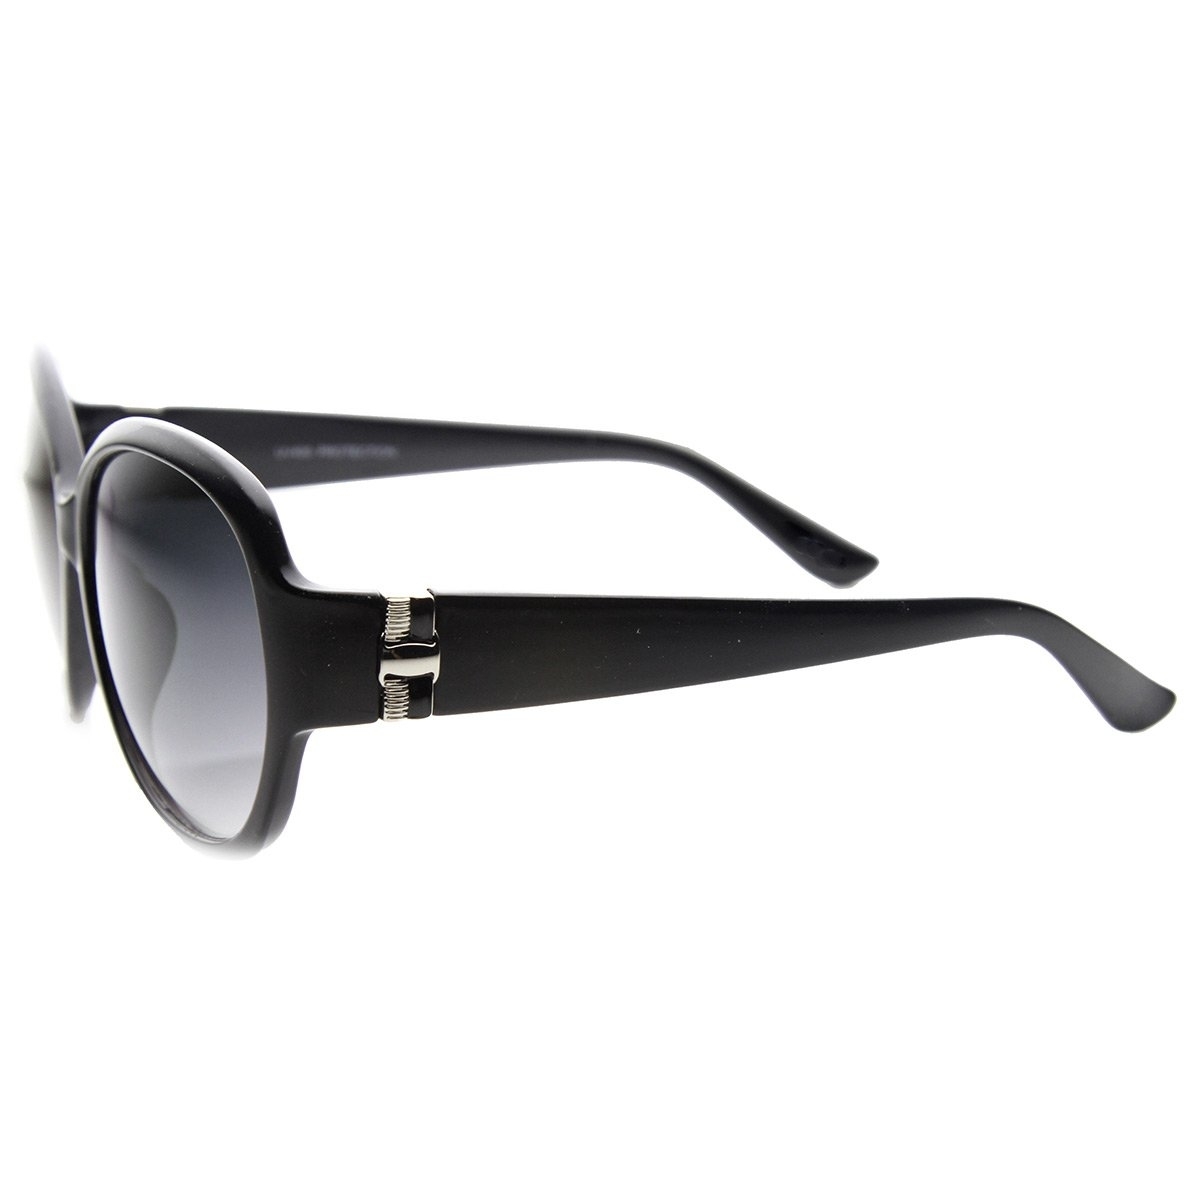 Designer Large Metal Accent Round Oversized Sunglasses - Tortoise-Brown Amber